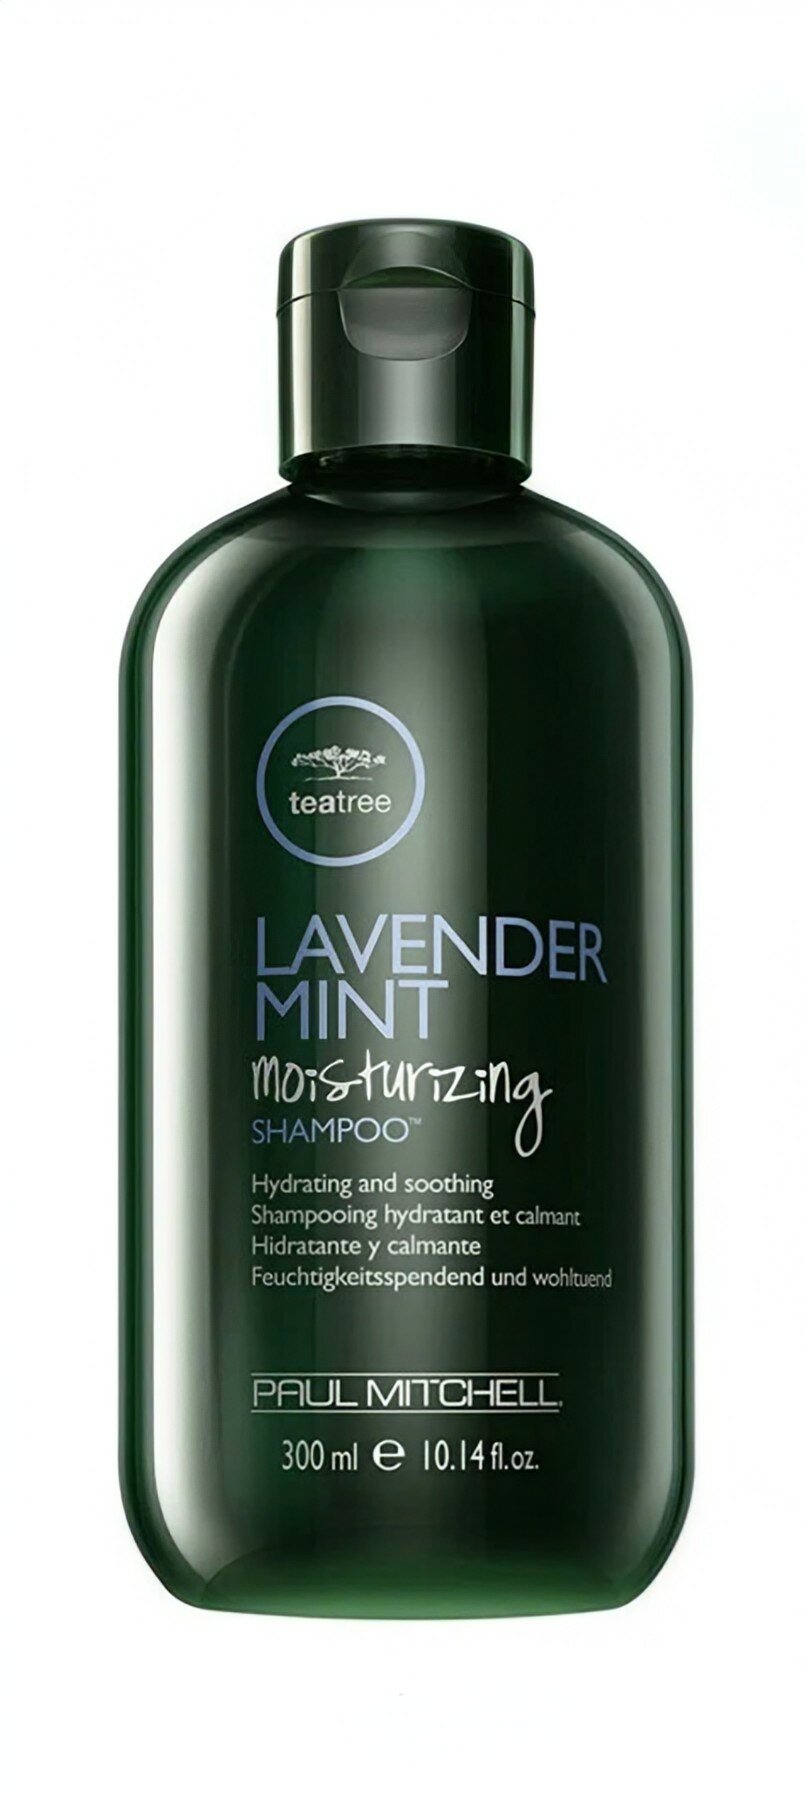 Paul Mitchell Lavender Mint Moisturizing Shampoo - Увлажняющий шампунь с экстрактом лаванды 300 мл